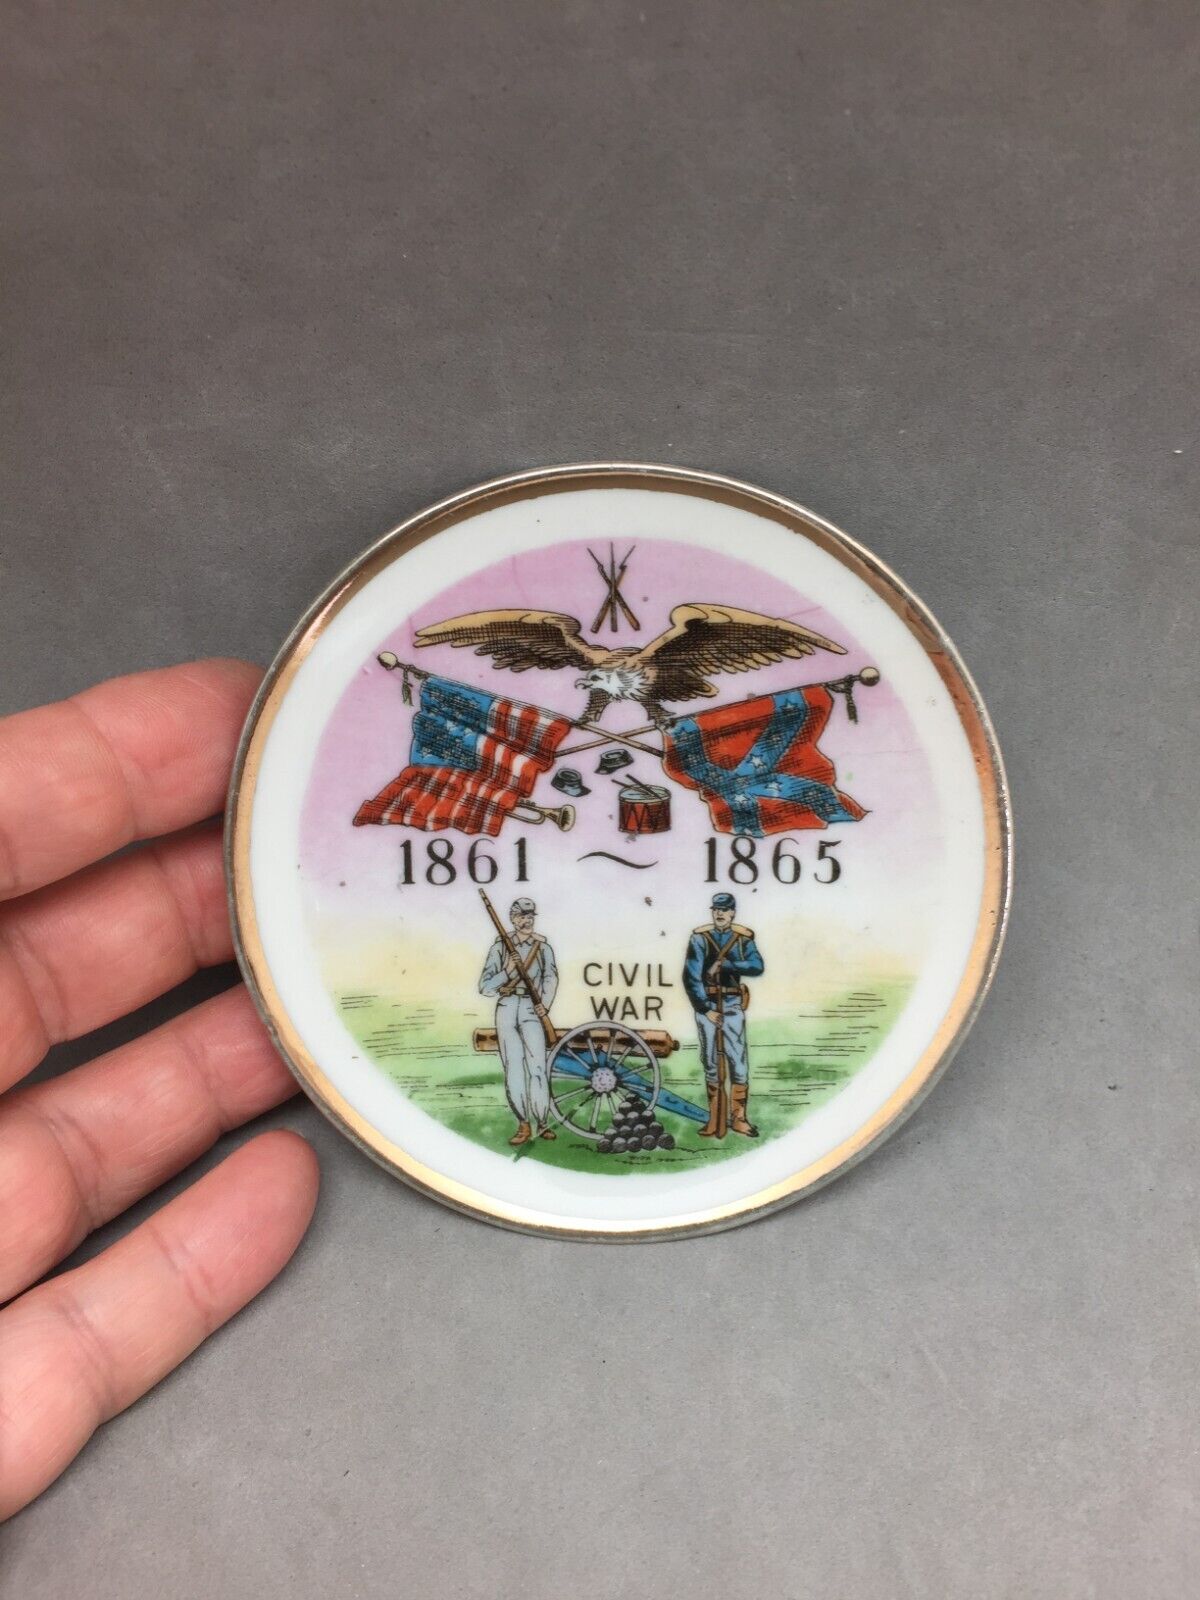 Civil War Souvenir Plate Ceramic 1861-1865 Vintage G Nov Co Japan 4\